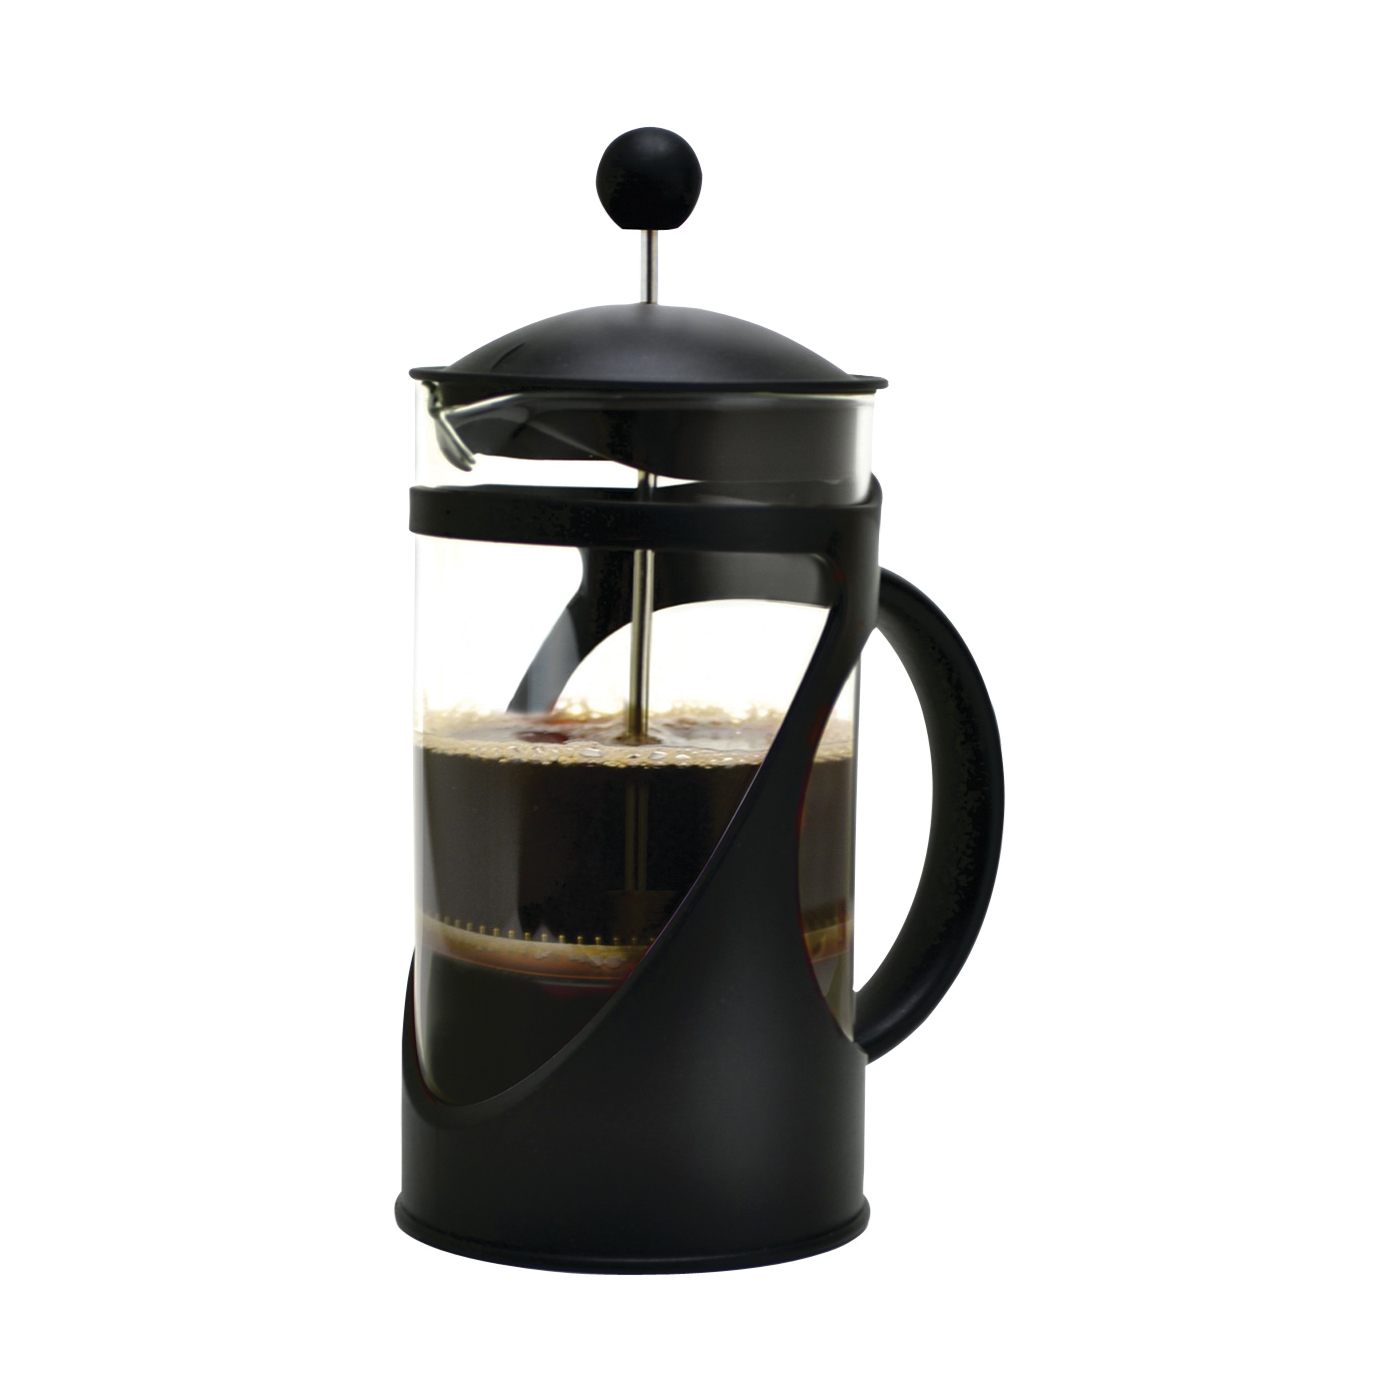 TCP-2908 Coffee Press, 8 Cups Capacity, Borosilicate Glass/Plastic/Stainless Steel, Black